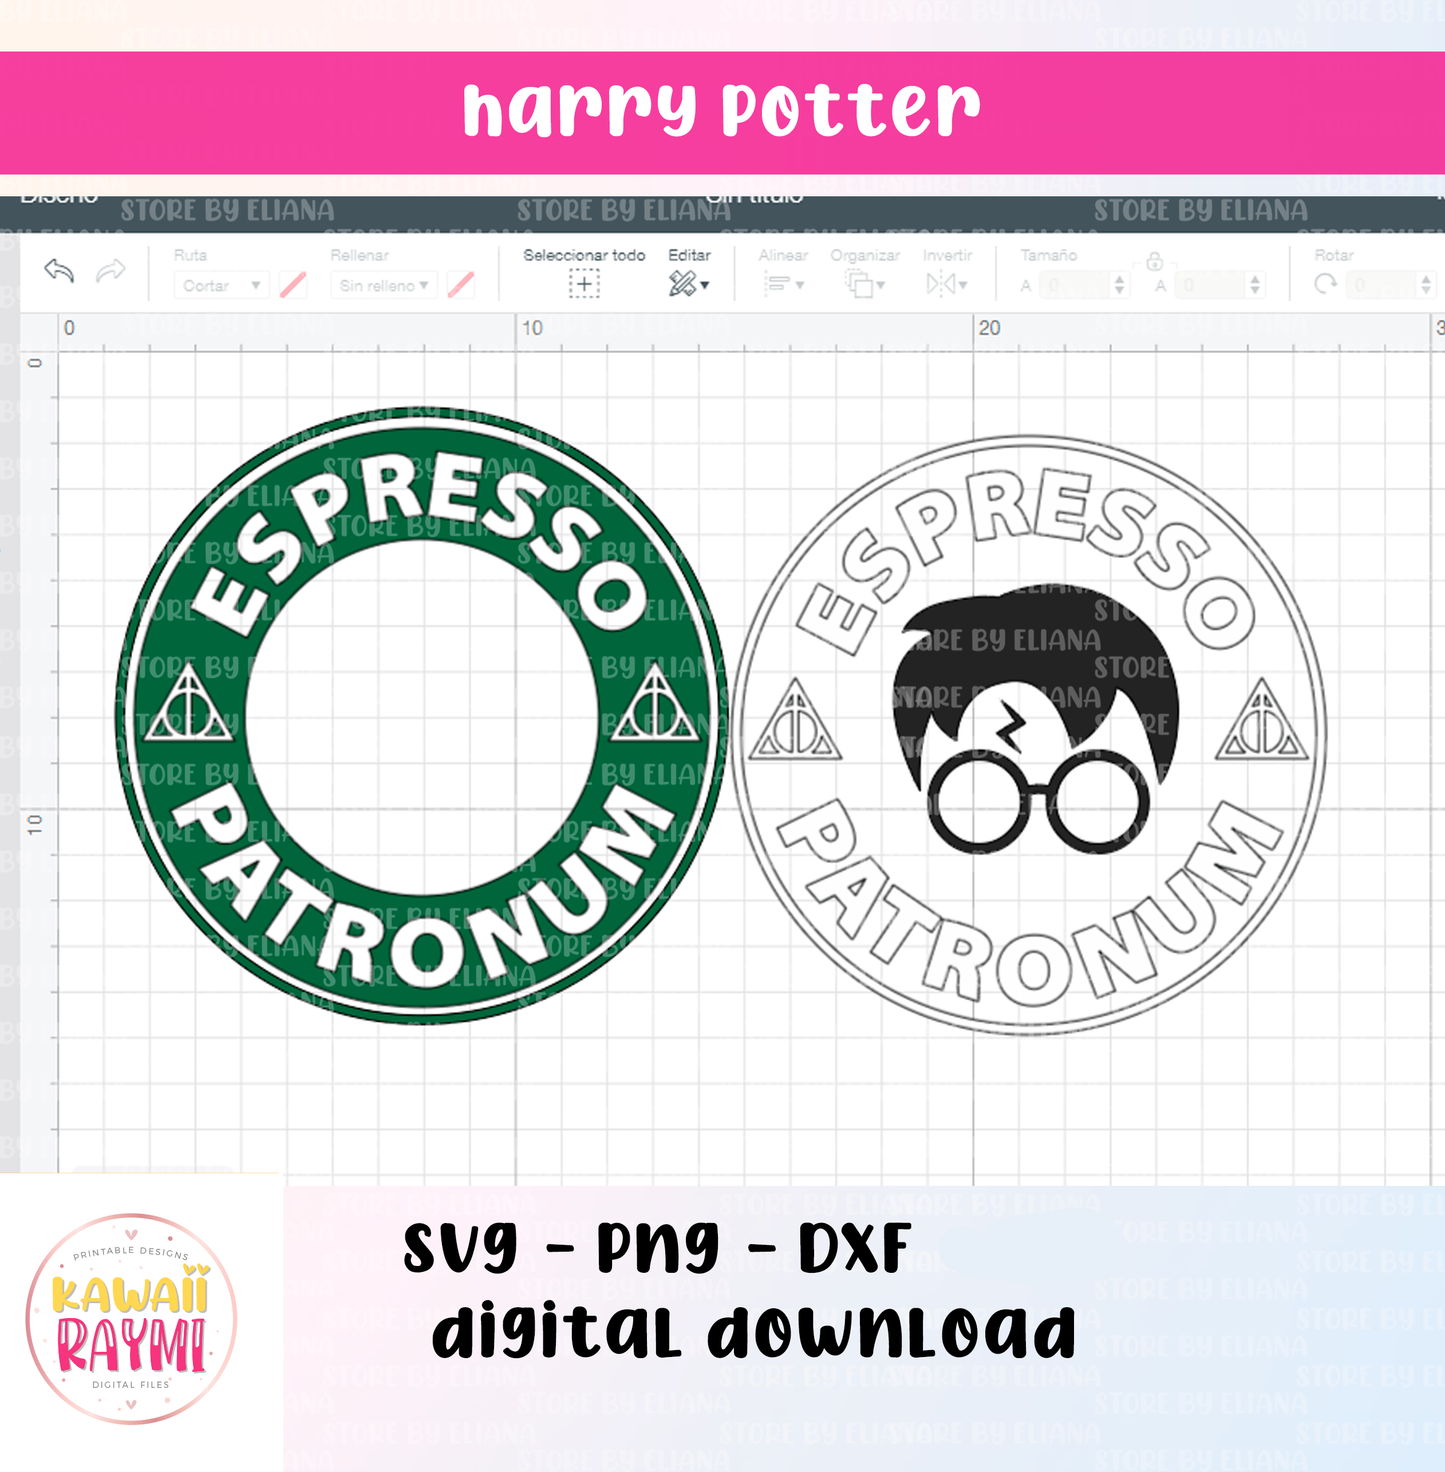 Harry Potter espresso patronum starbucks SVG, png, cricut, dxf, instant download